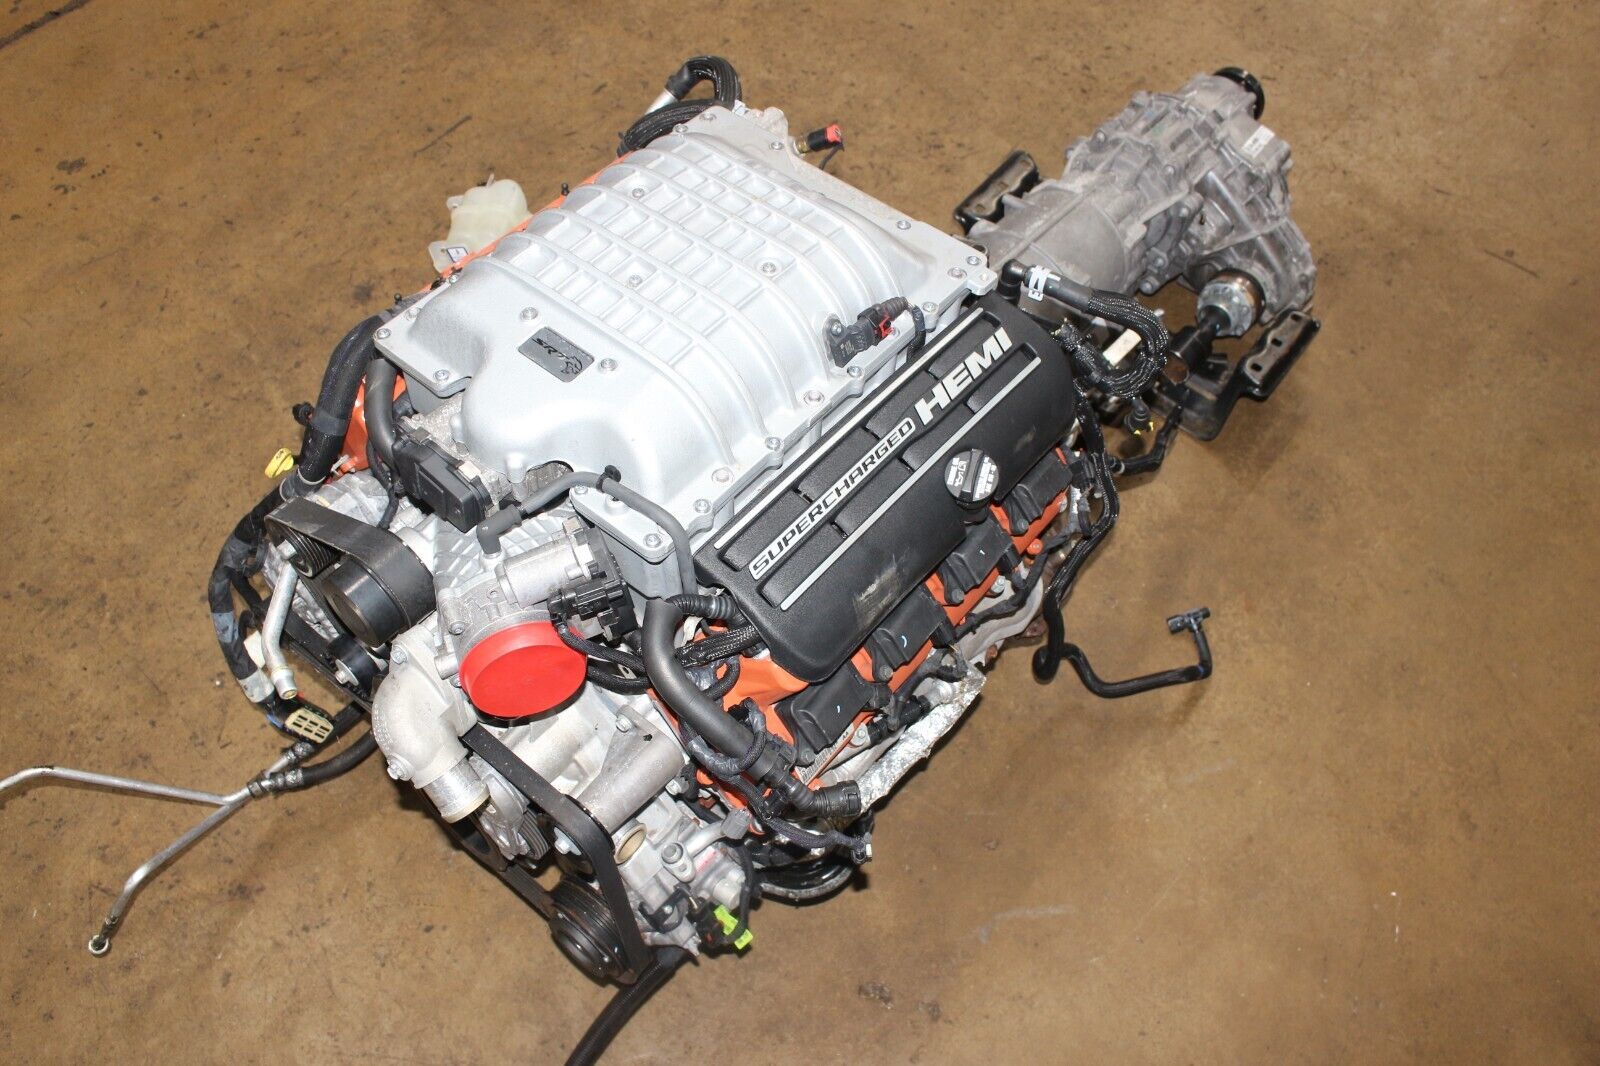 Hellcat Jeep Grand Cherokee Trackhawk Engine 6.2l Supercharged 4x4 Transmission